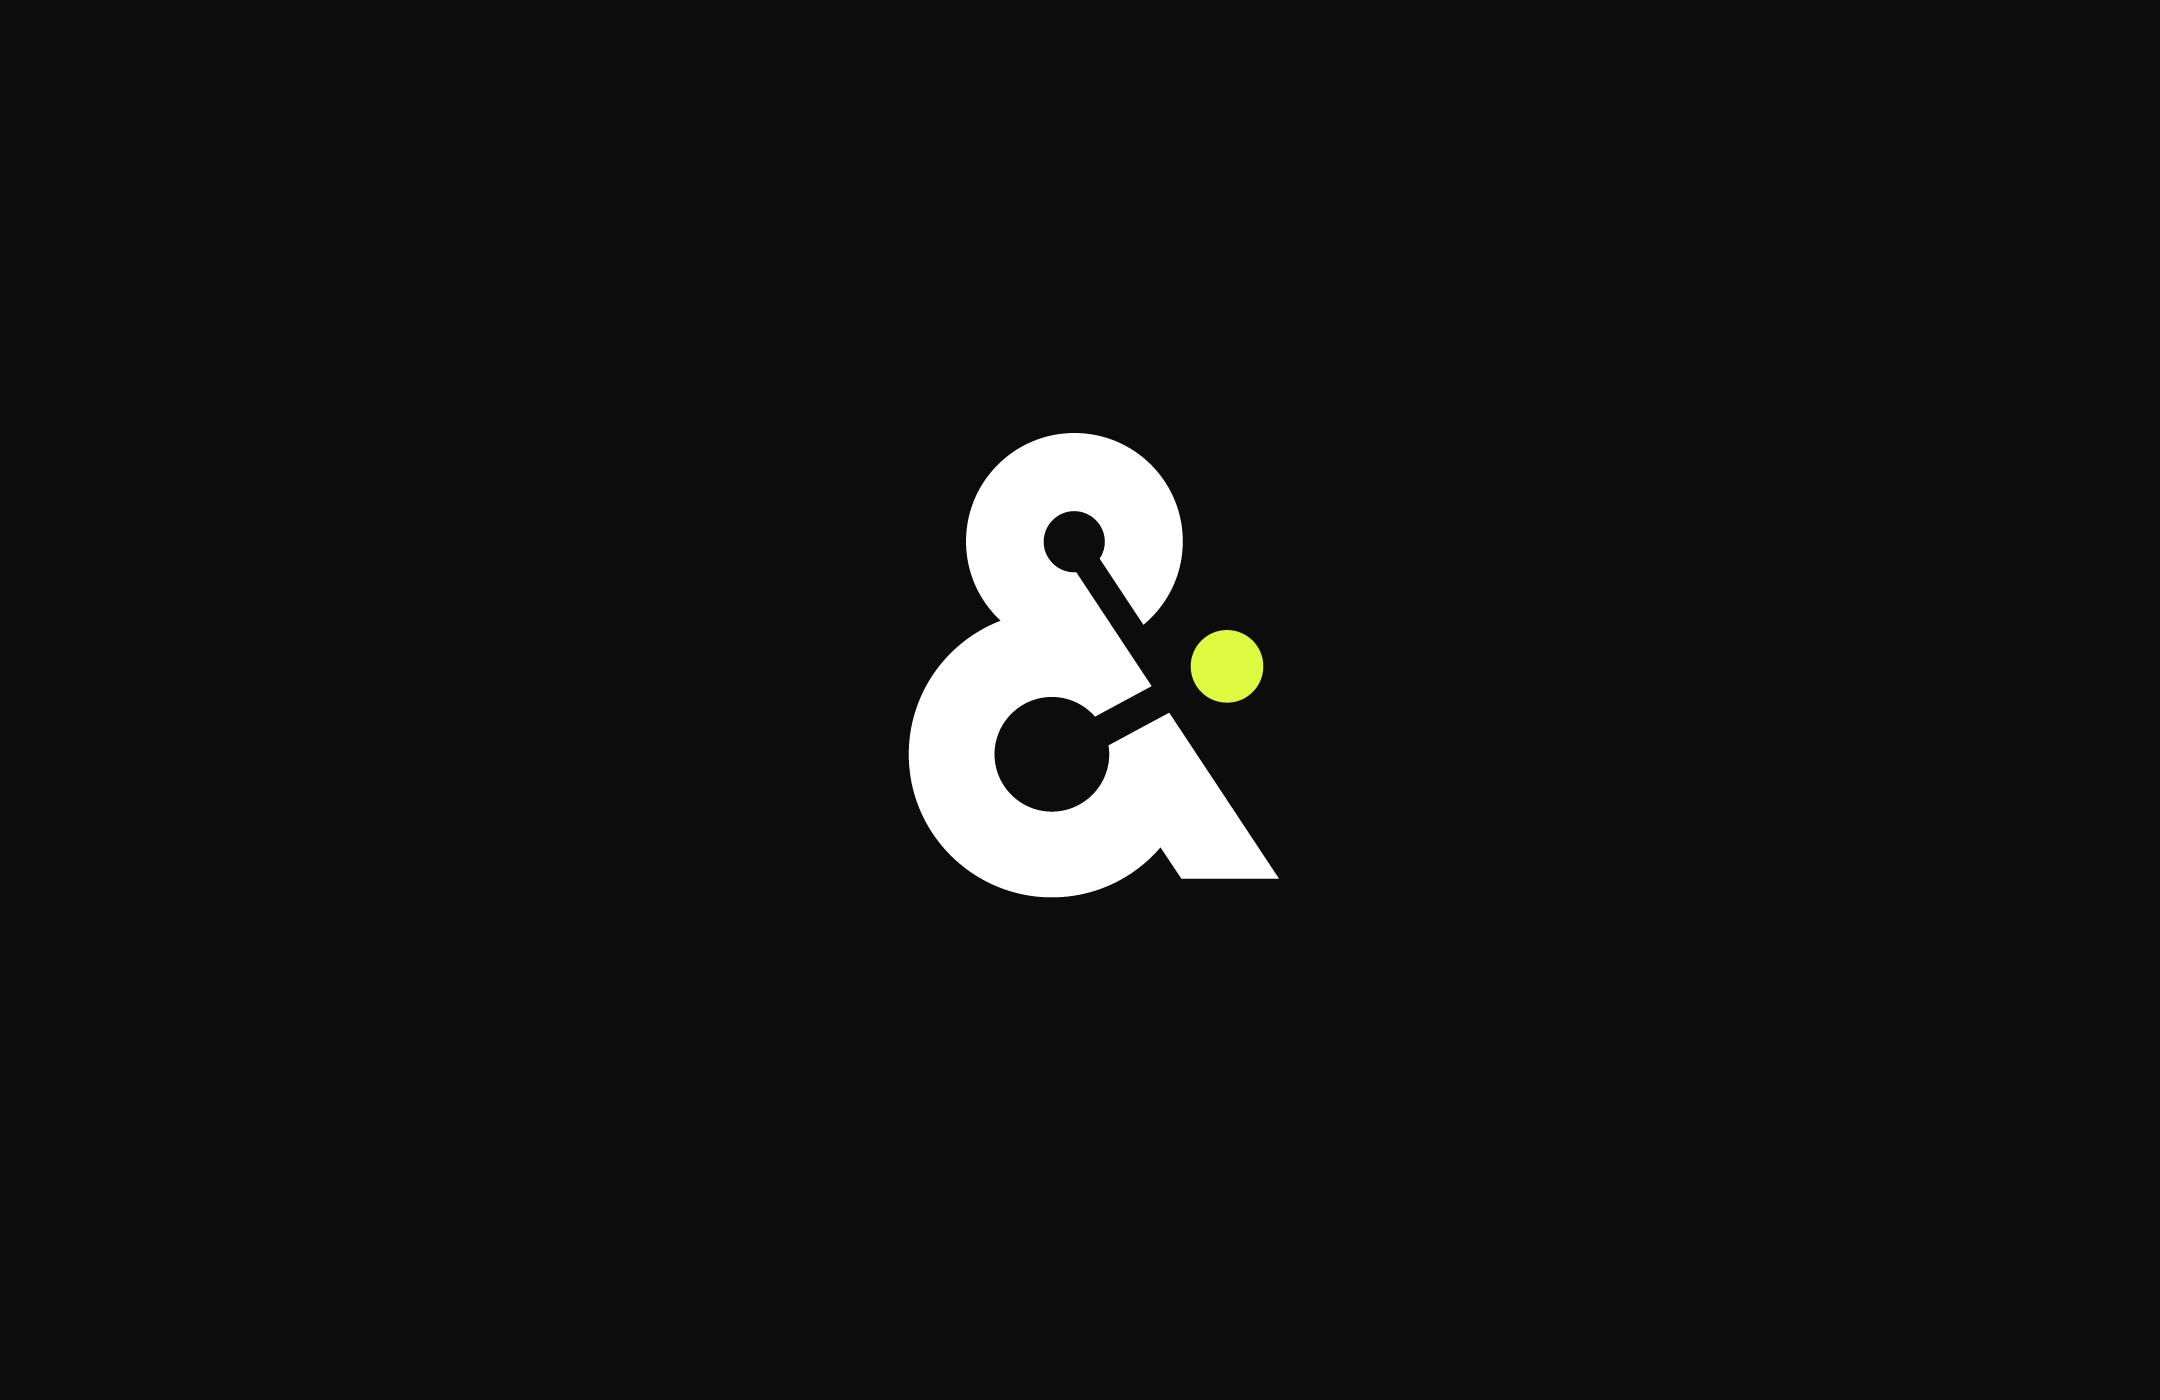 Amperity Ampersand logo on a dark background.